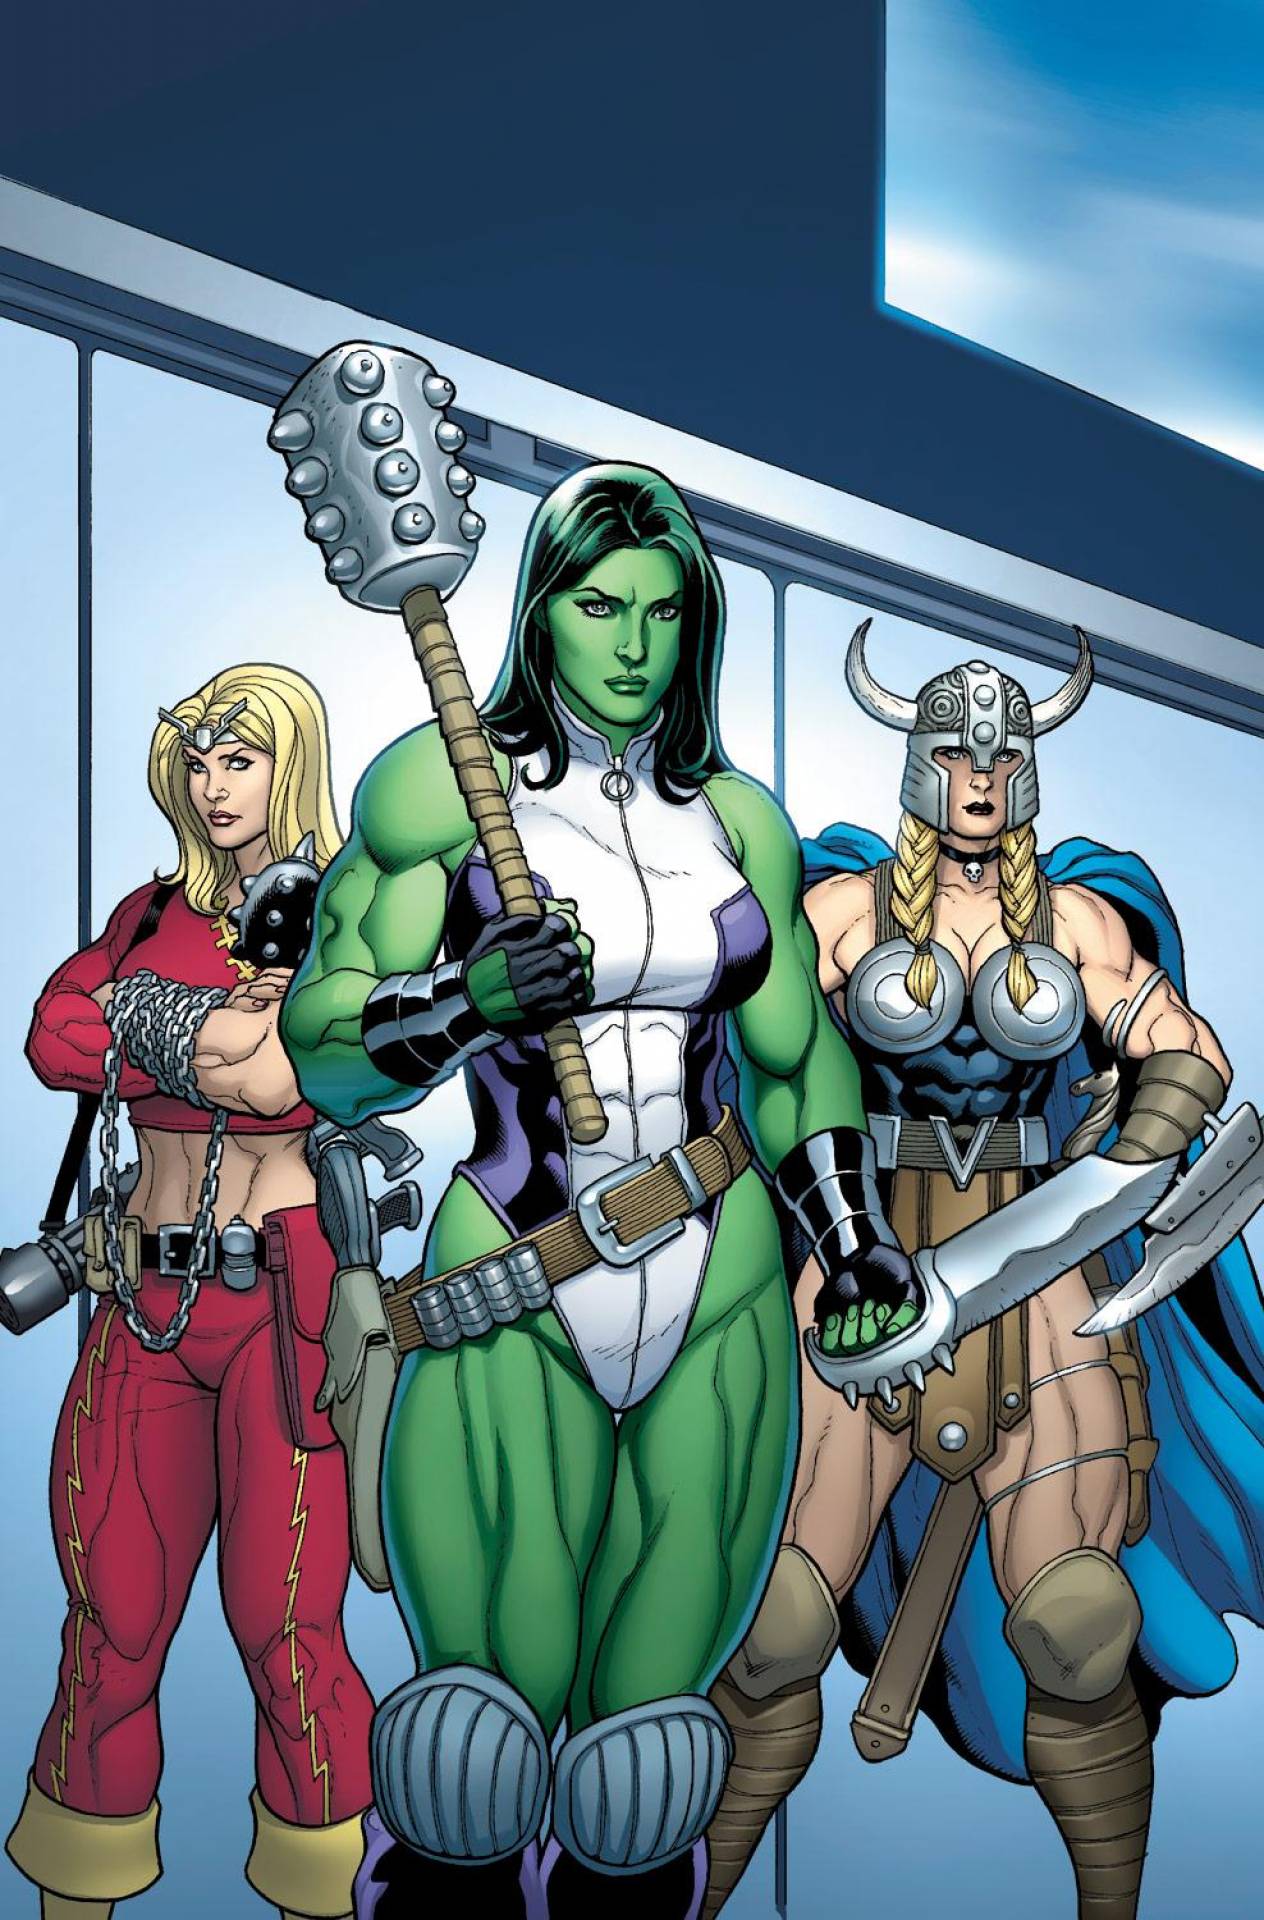 She-Hulk has been constantly slut-shamed in the comic books